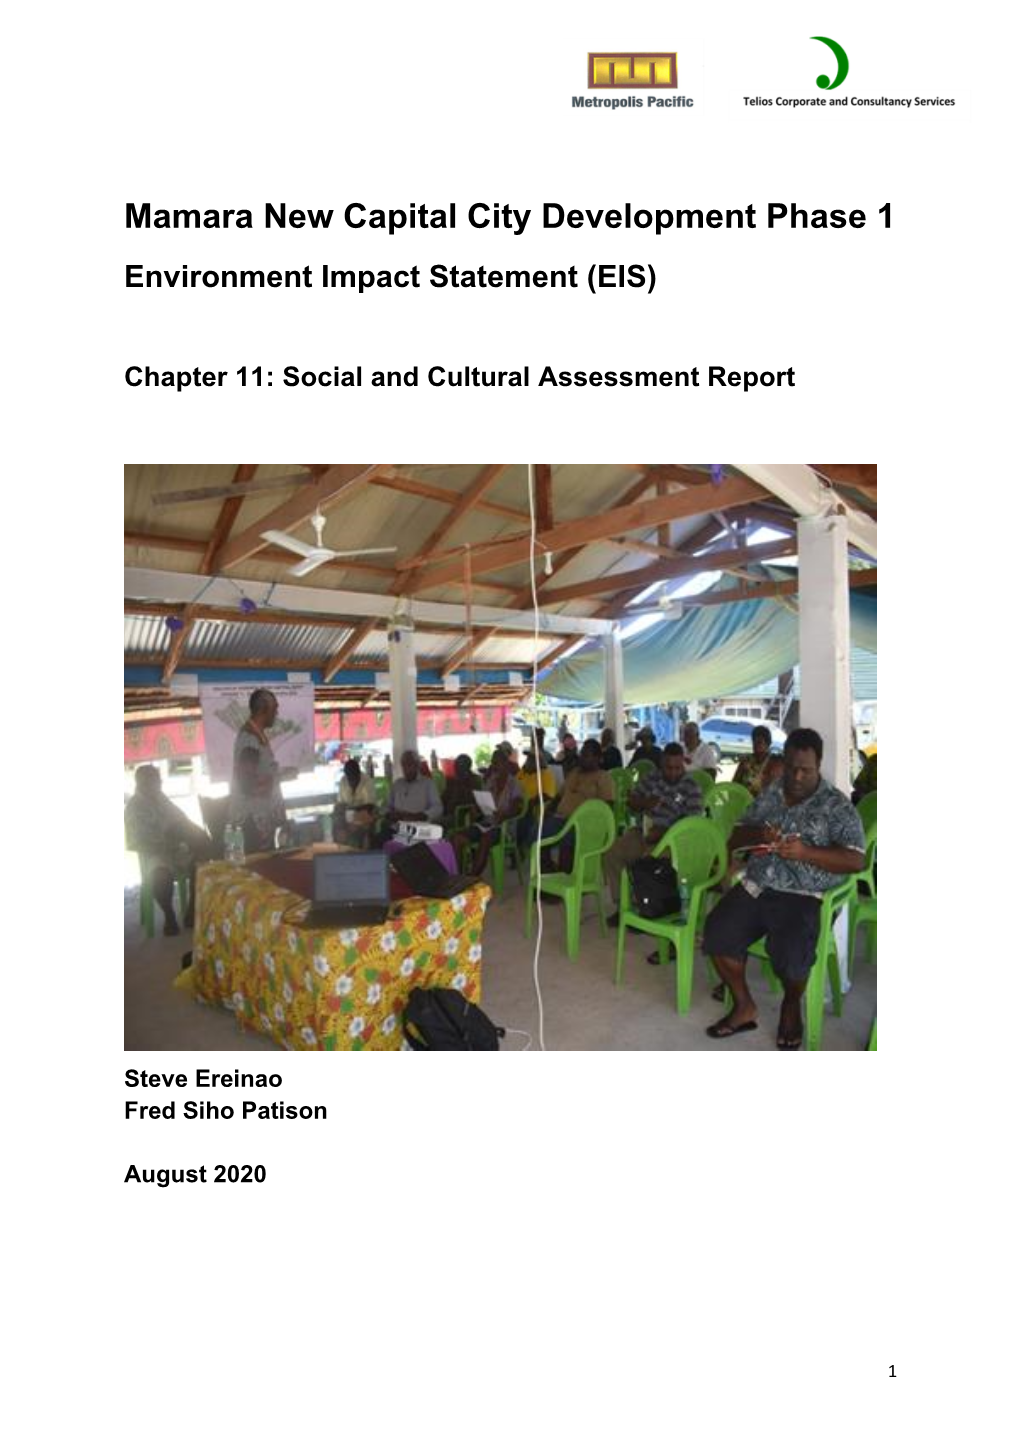 Mamara New Capital City Development Phase 1 Environment Impact Statement (EIS)